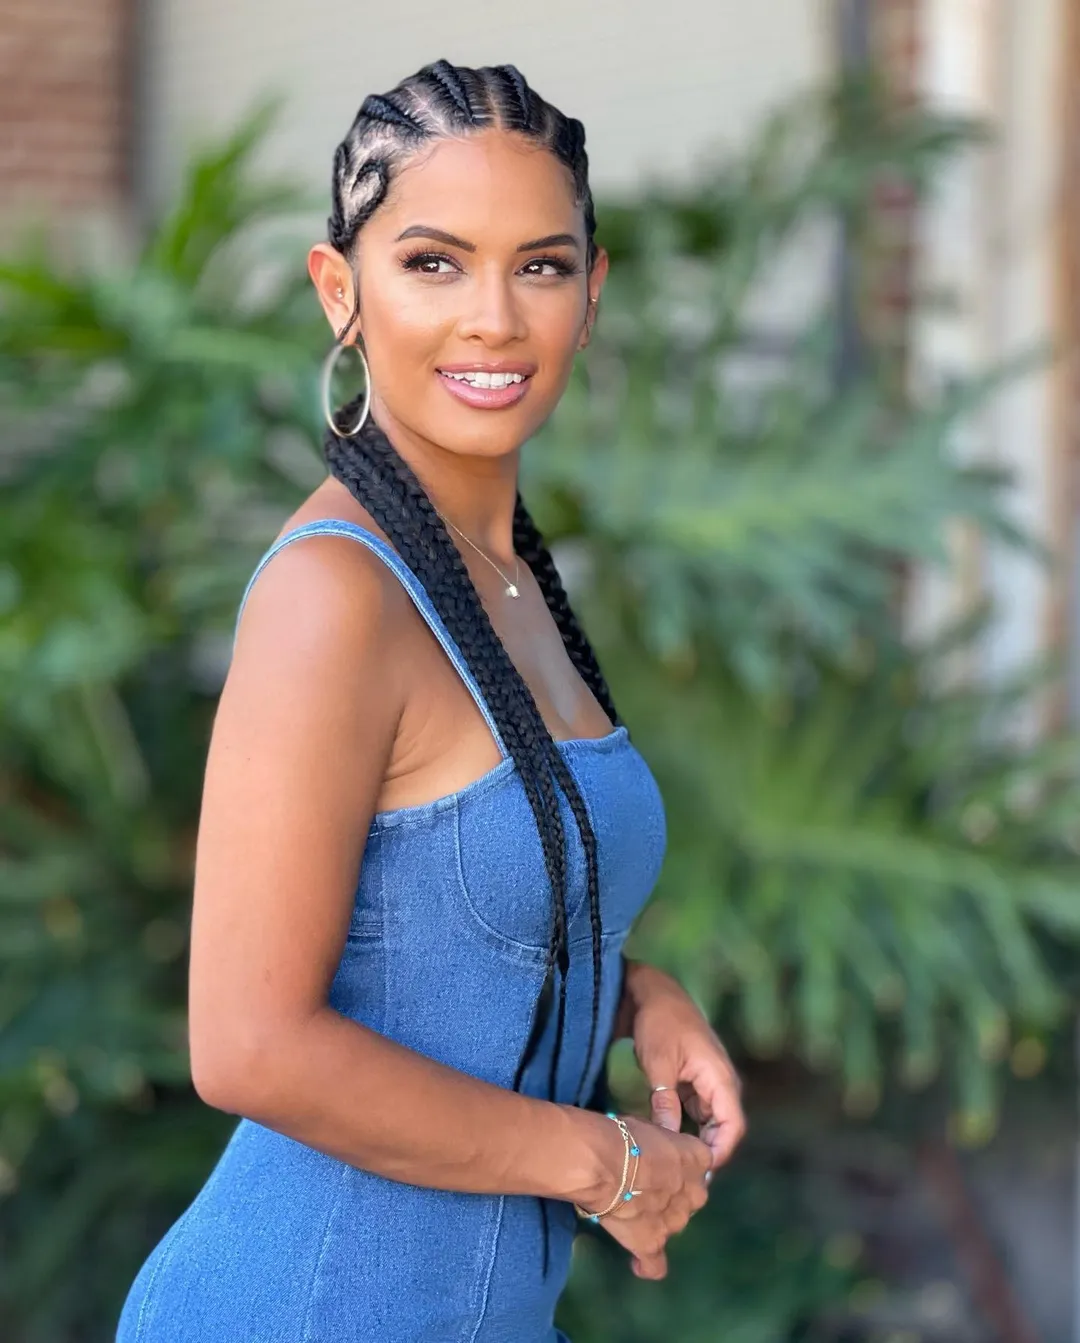 ROCSI DIAZ - Most Beautiful Honduran Instagram Models - Female Social Influencer in Honduras Rising Star